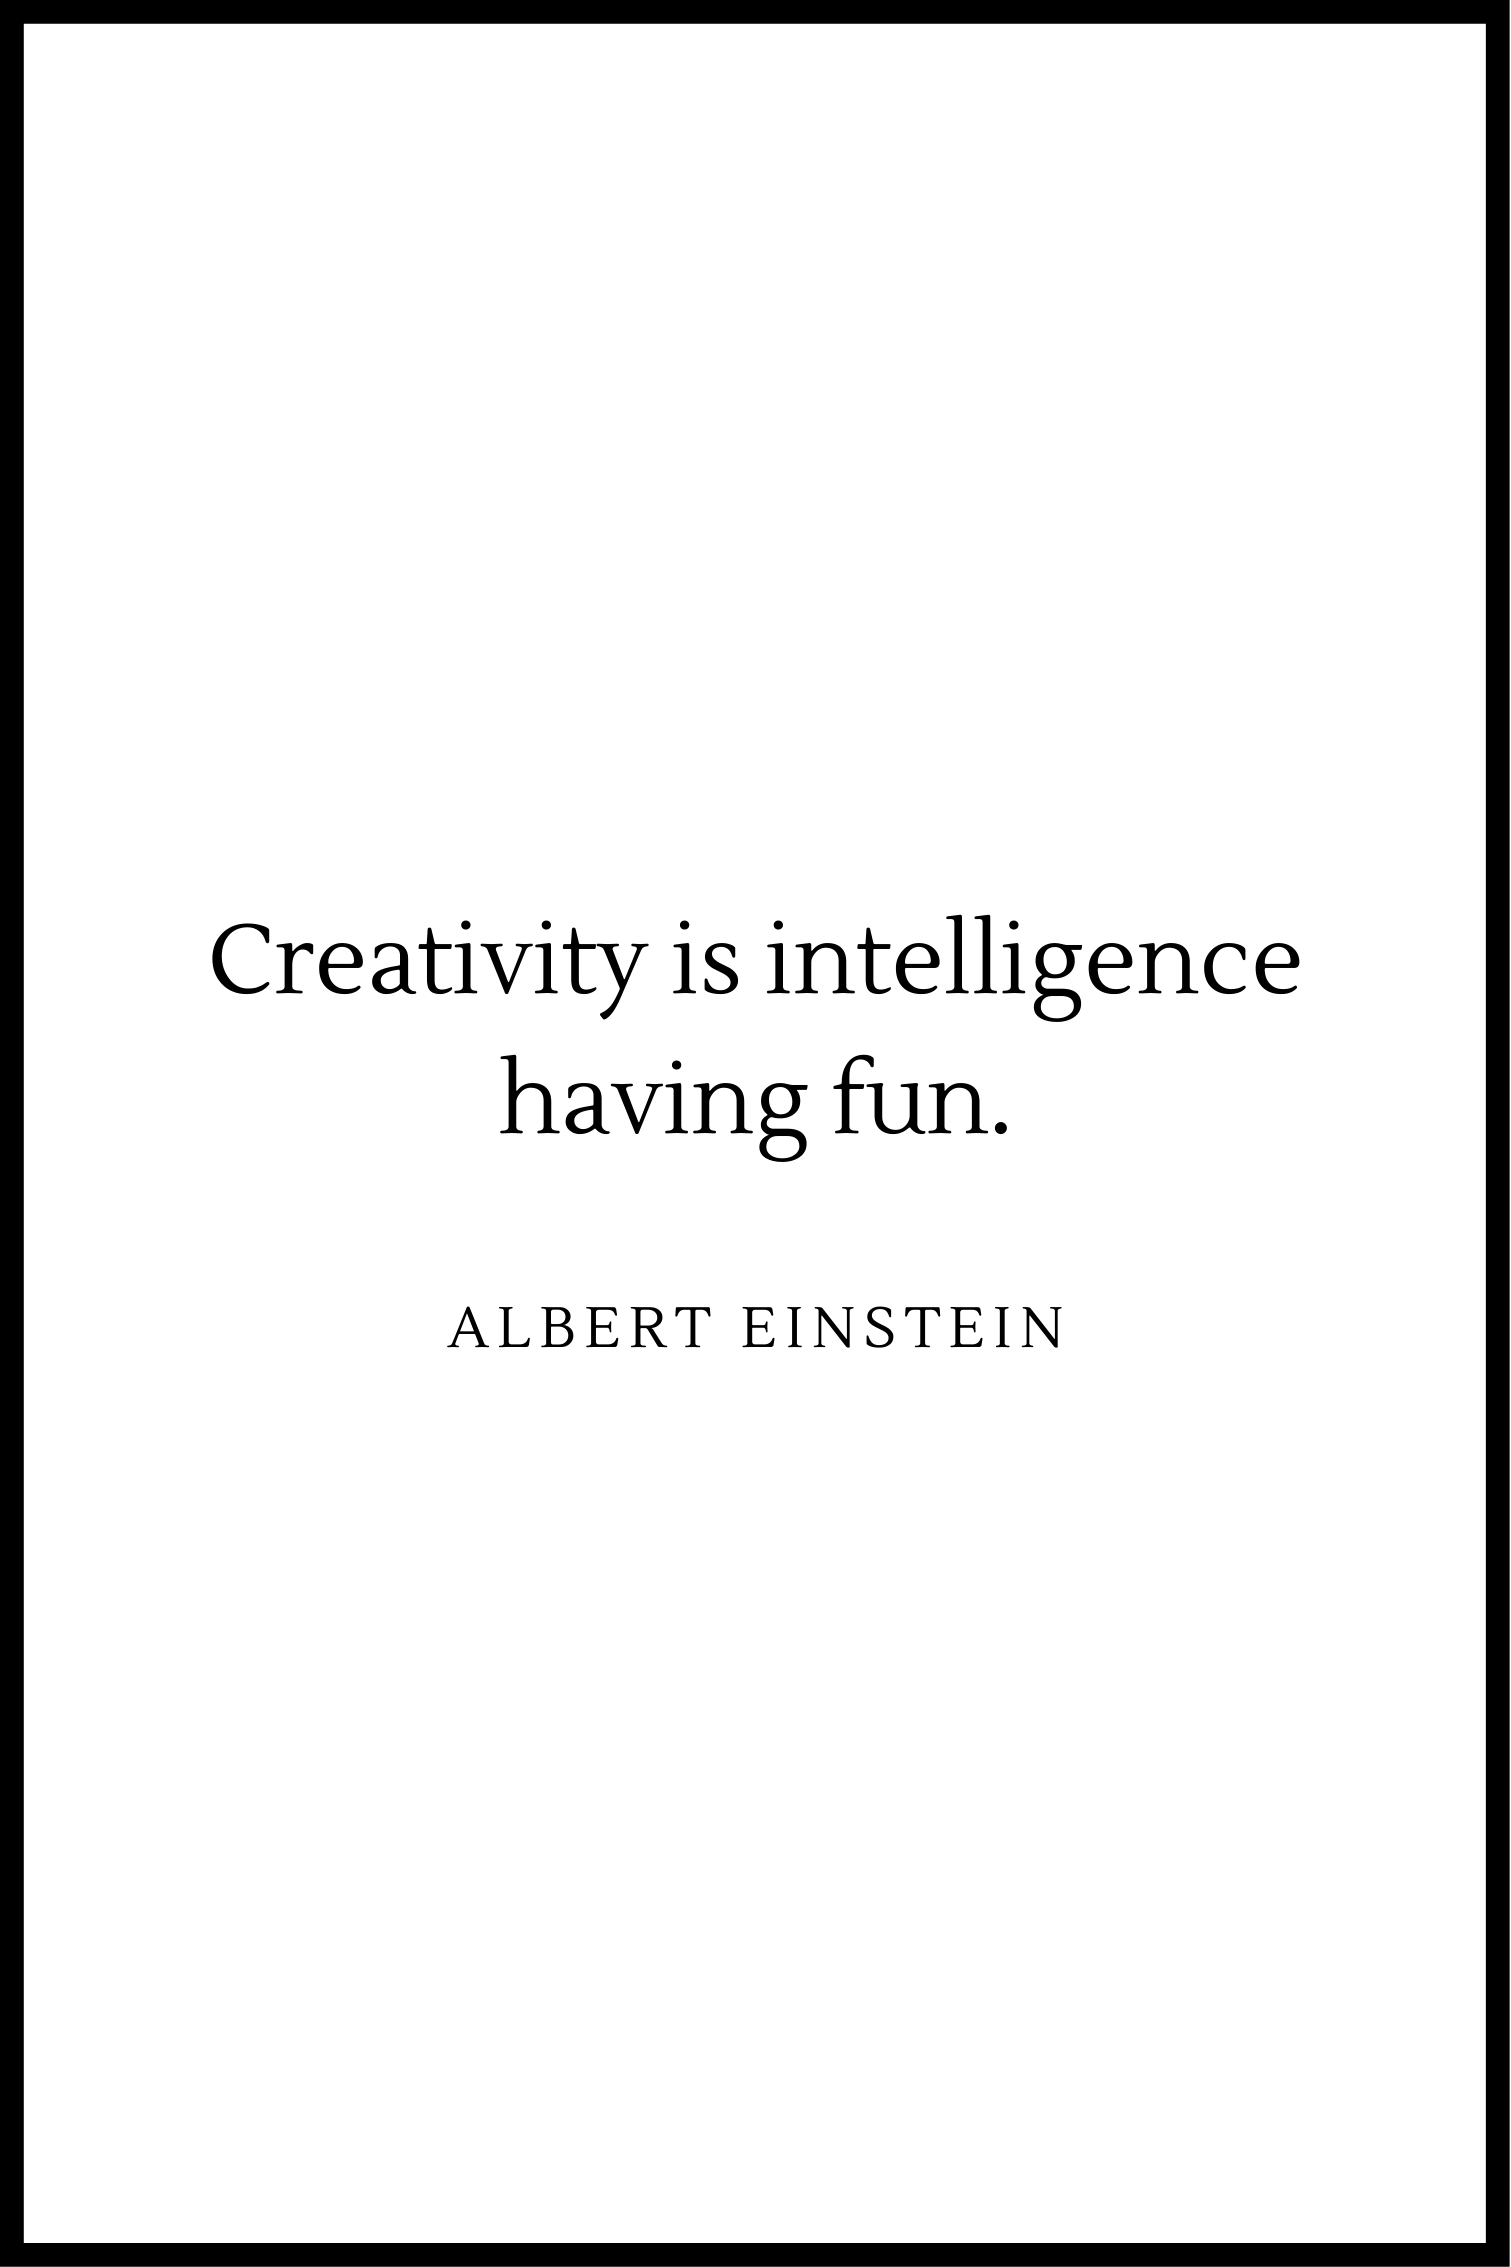 creativity is intellingence plakat